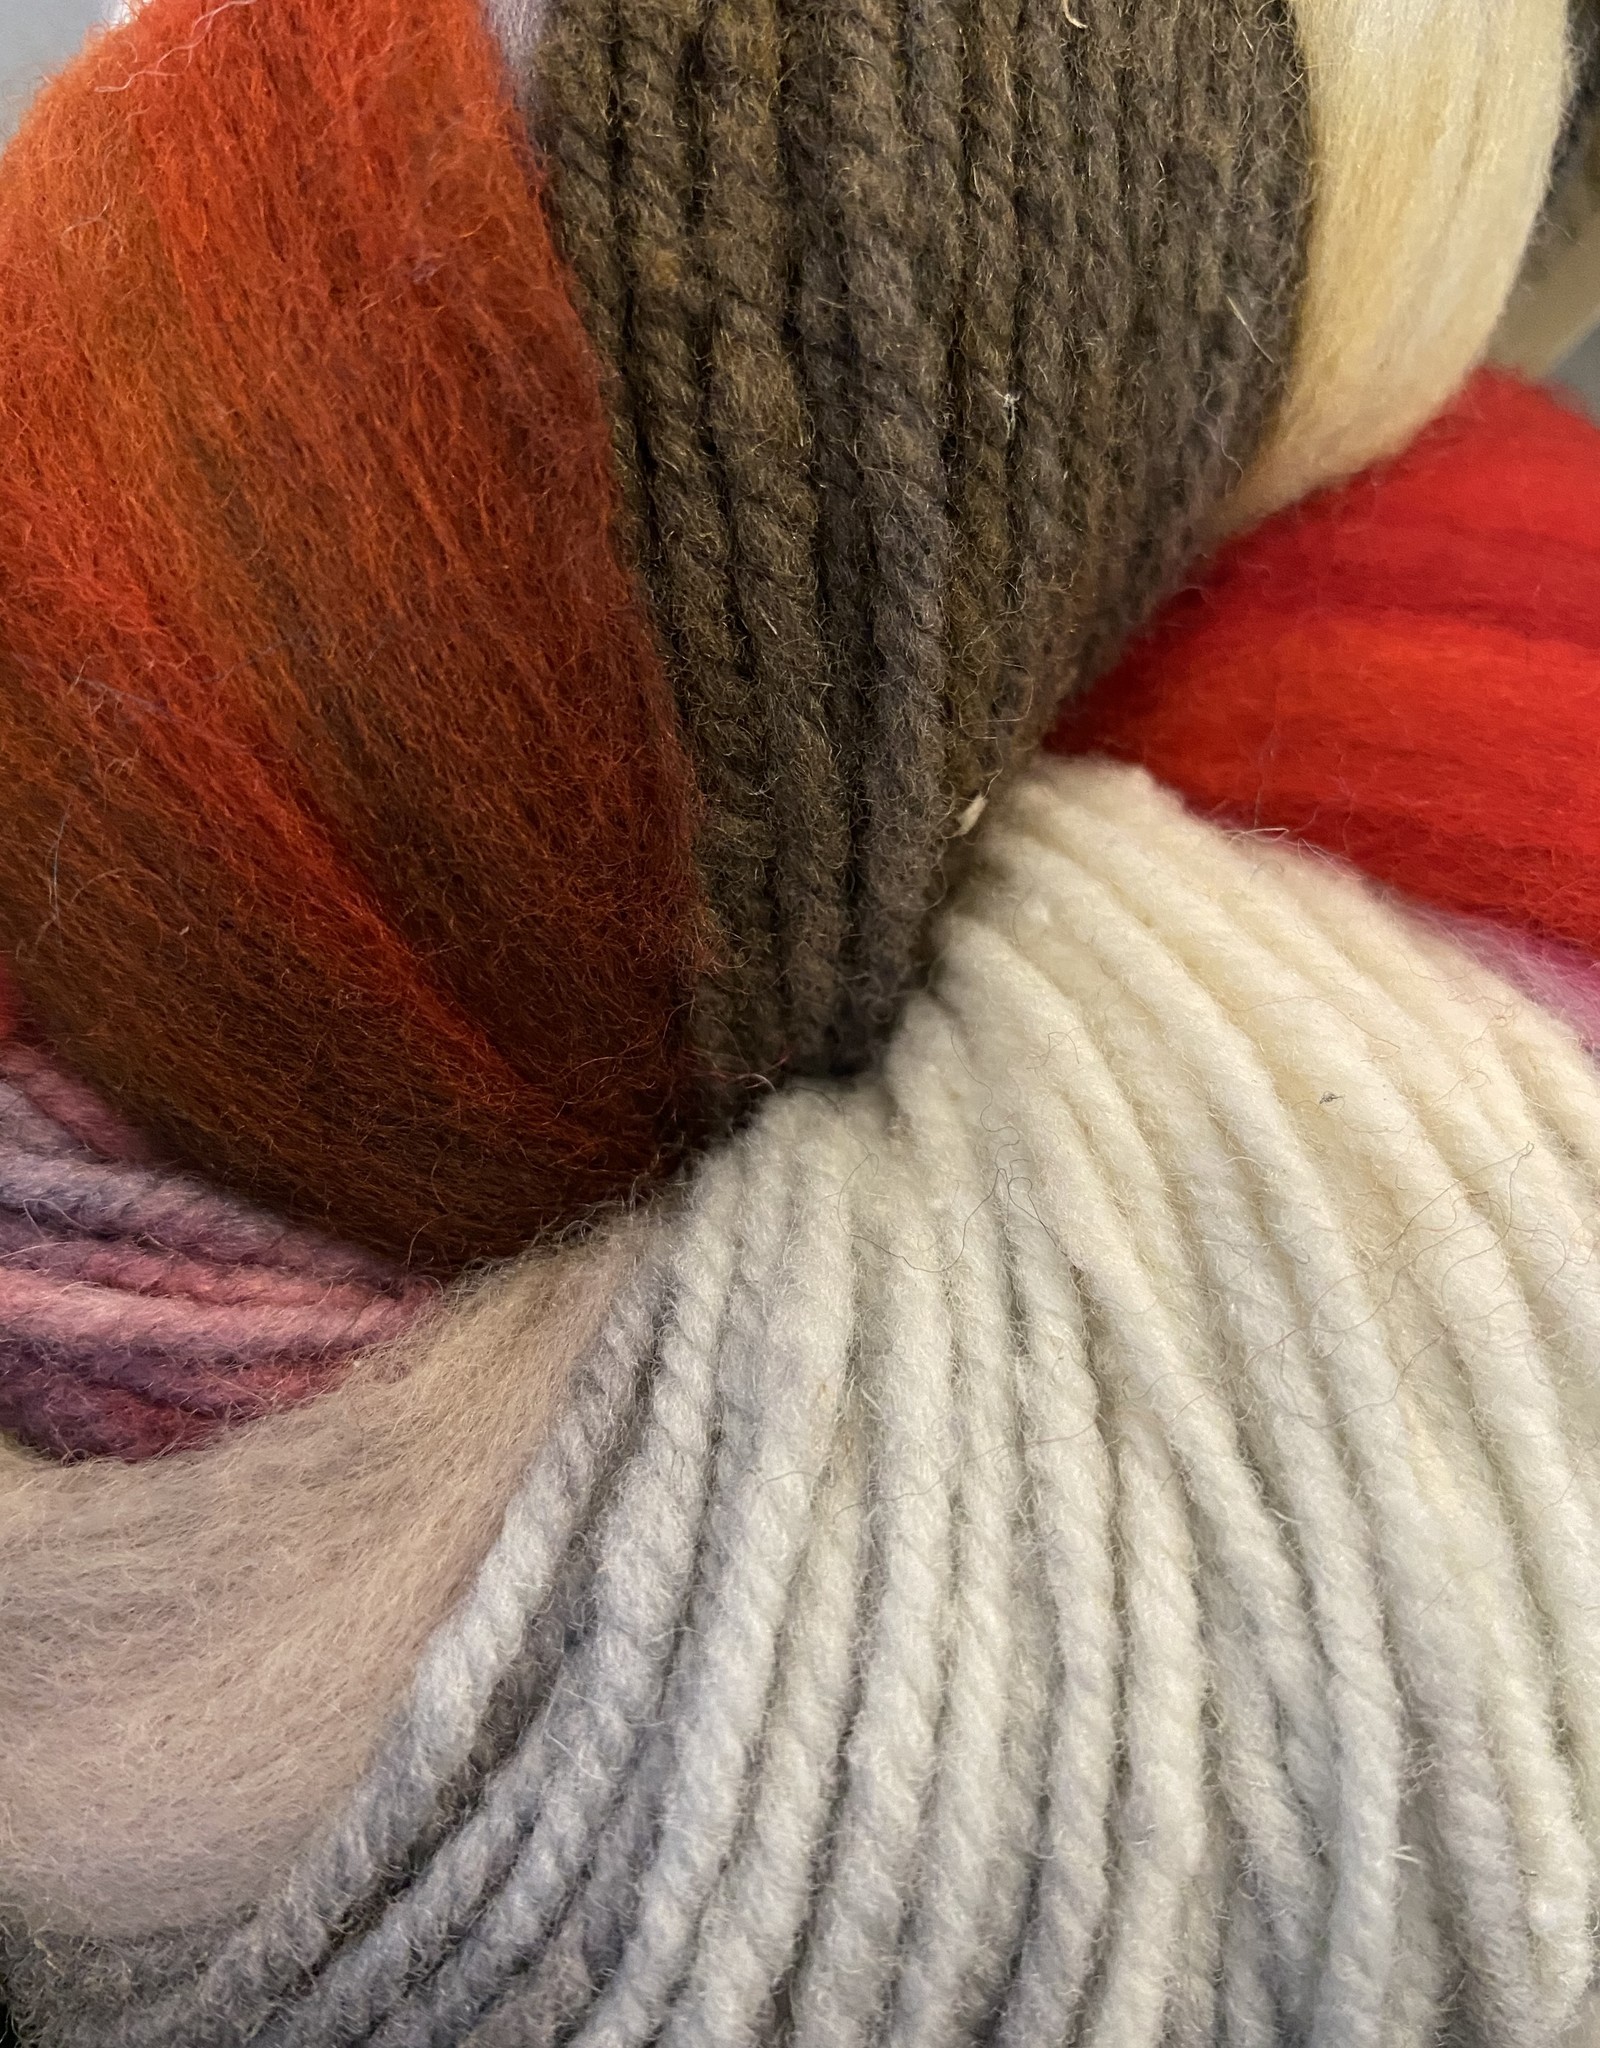 Fleece Artist Woolen Thrum Mittens